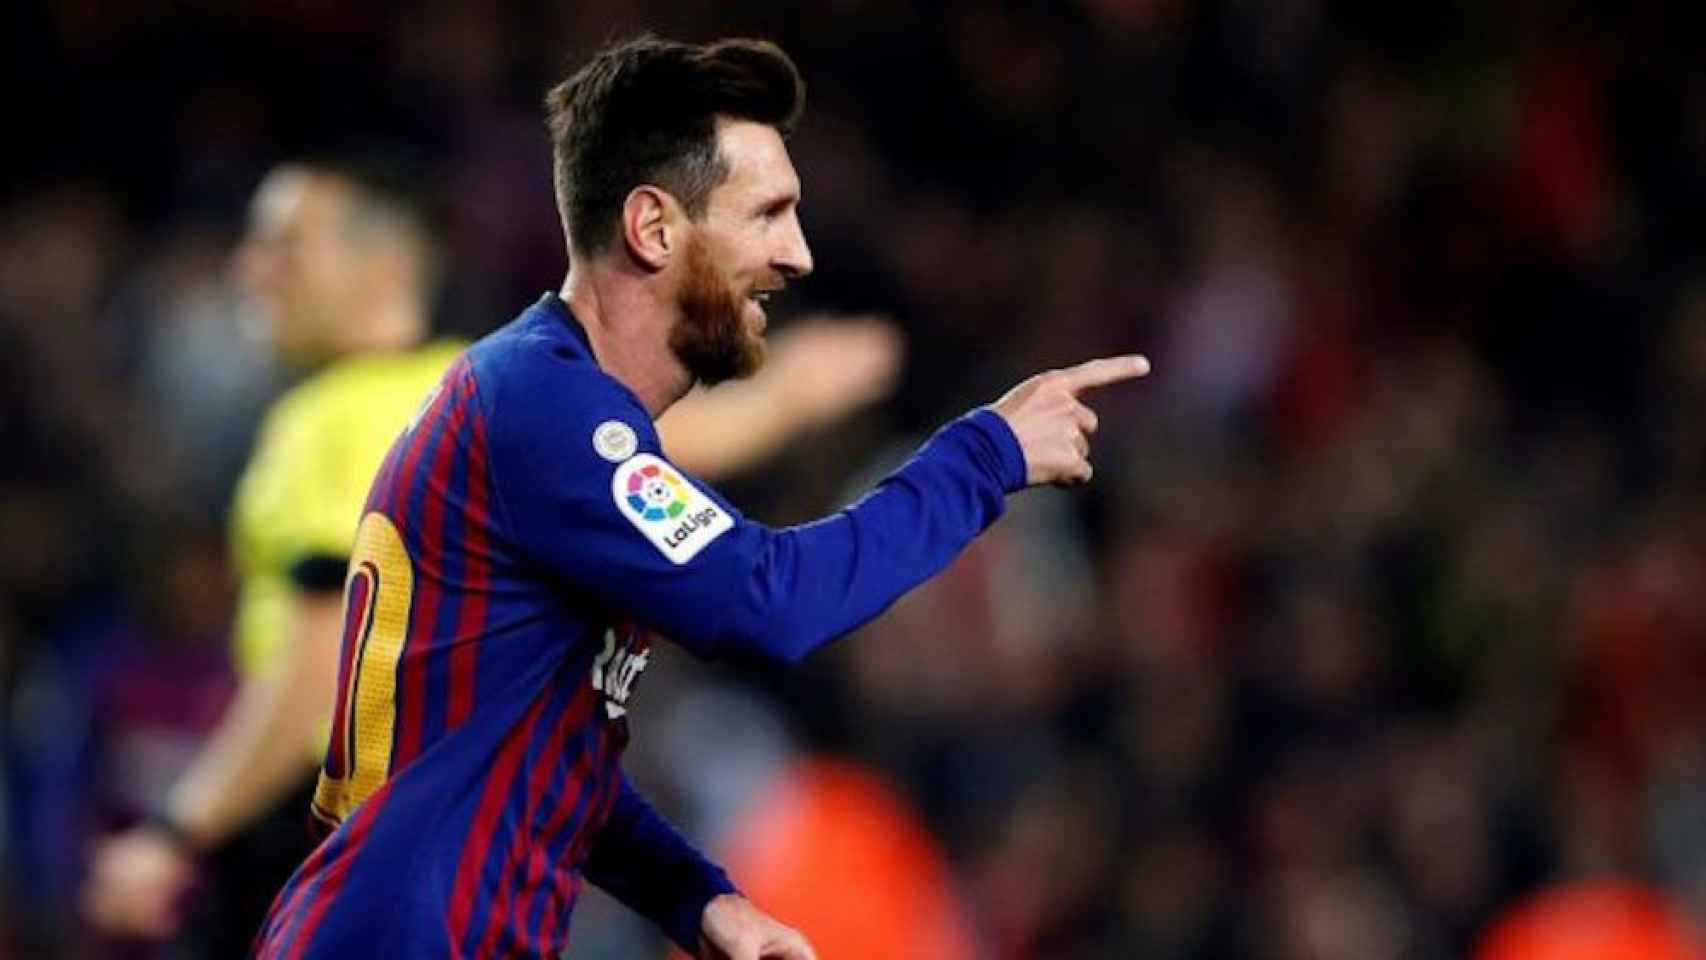 Una foto de Leo Messi durante un partido del Barça / Twitter